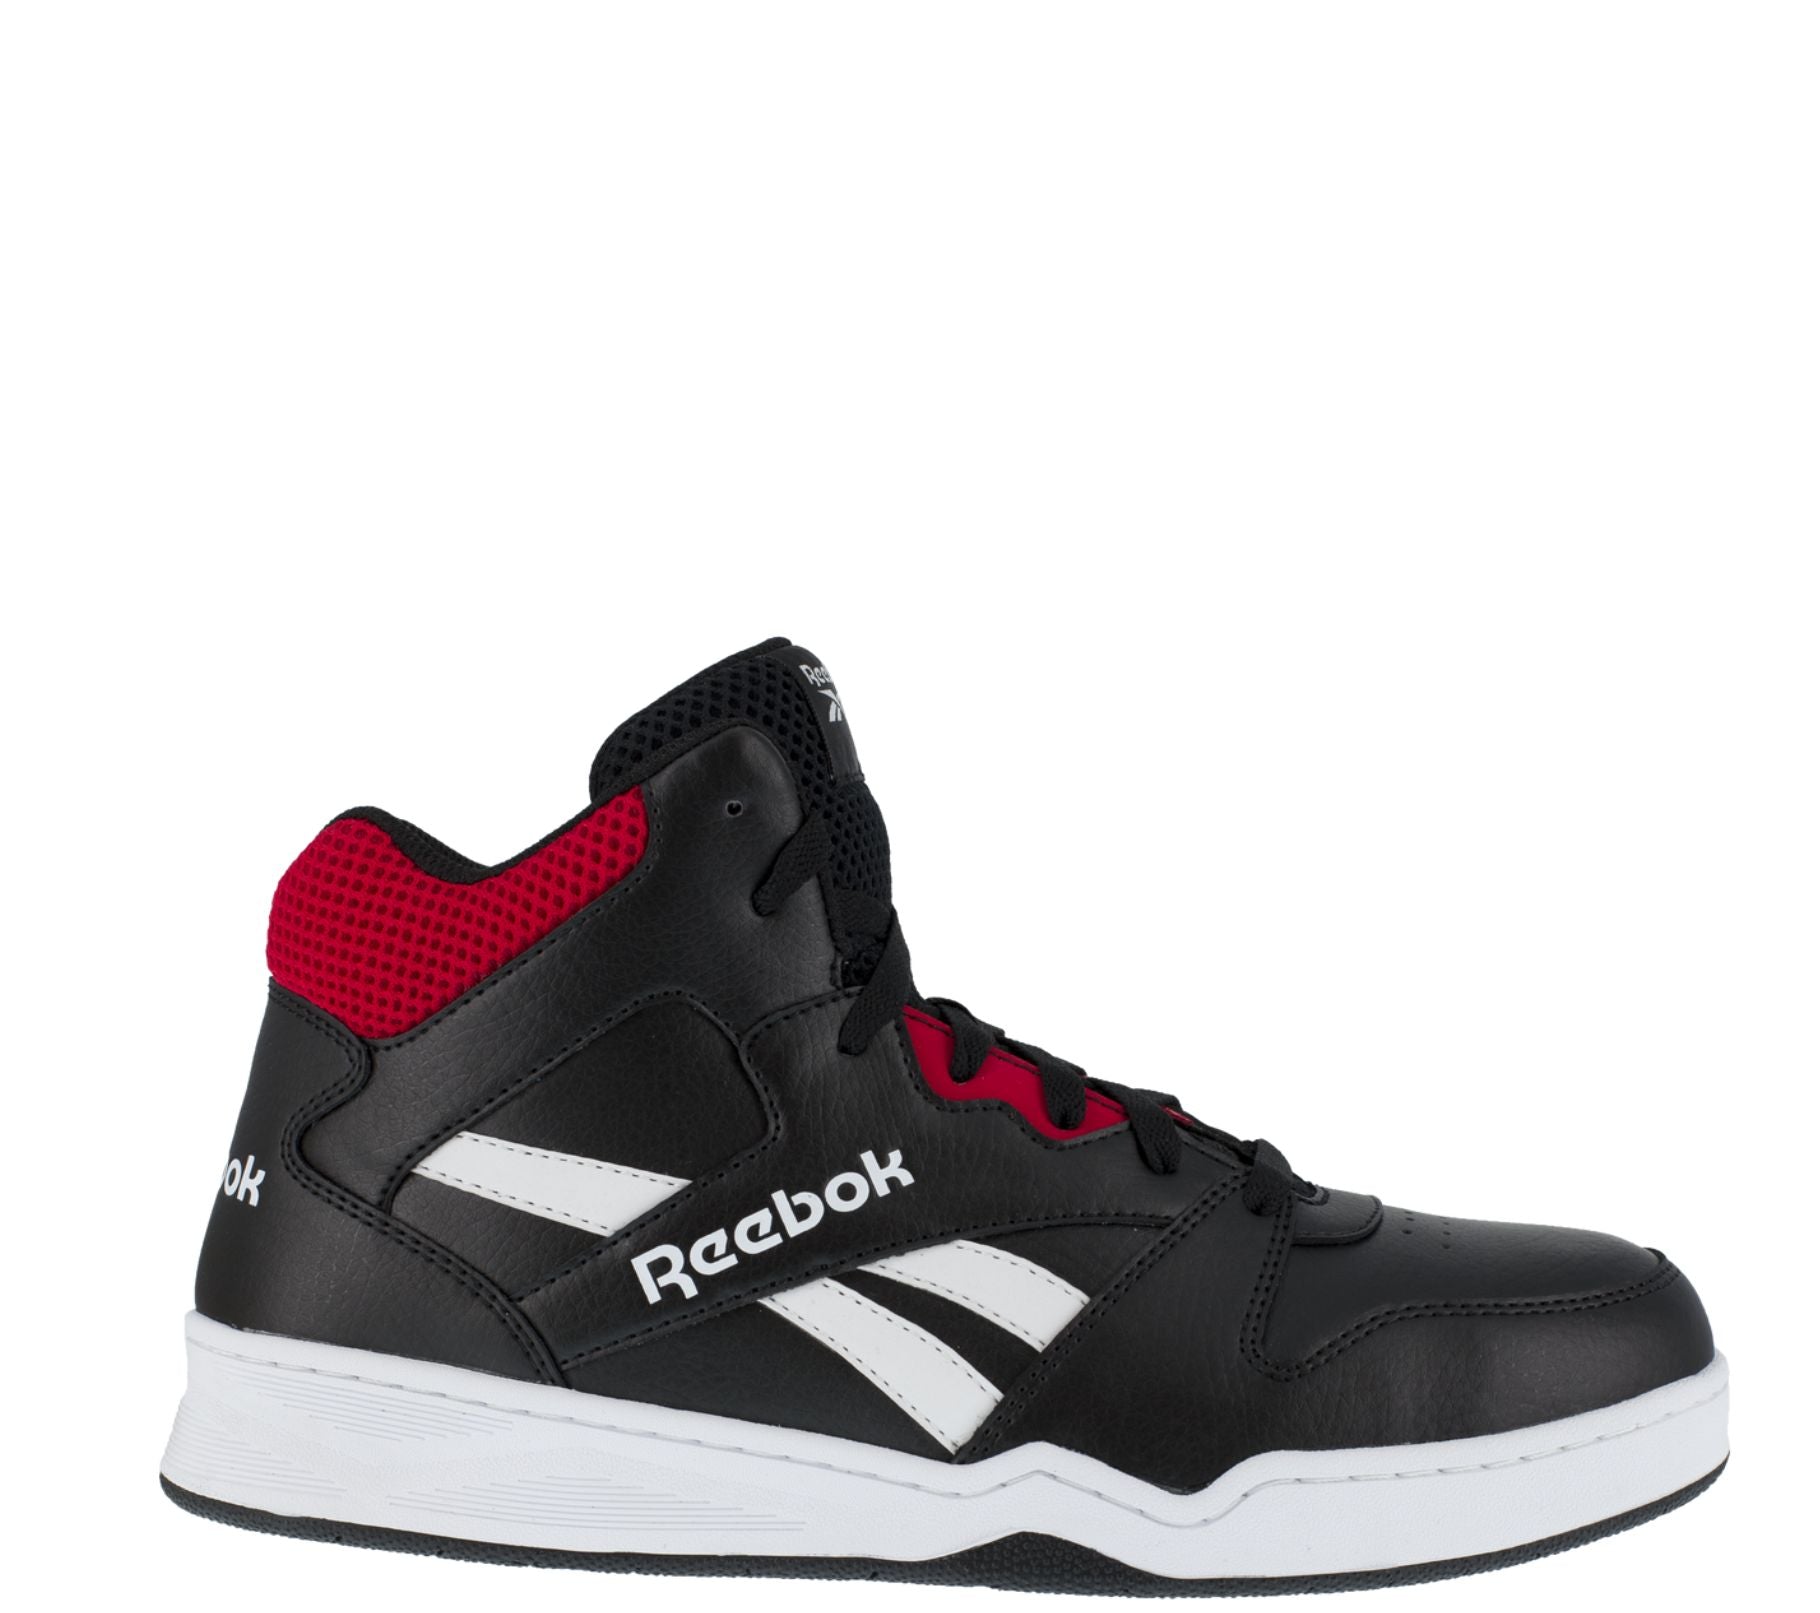 Reebok Work Men's EH Comp Toe Hi-Top Work Sneaker - Work World - Workwear, Work Boots, Safety Gear